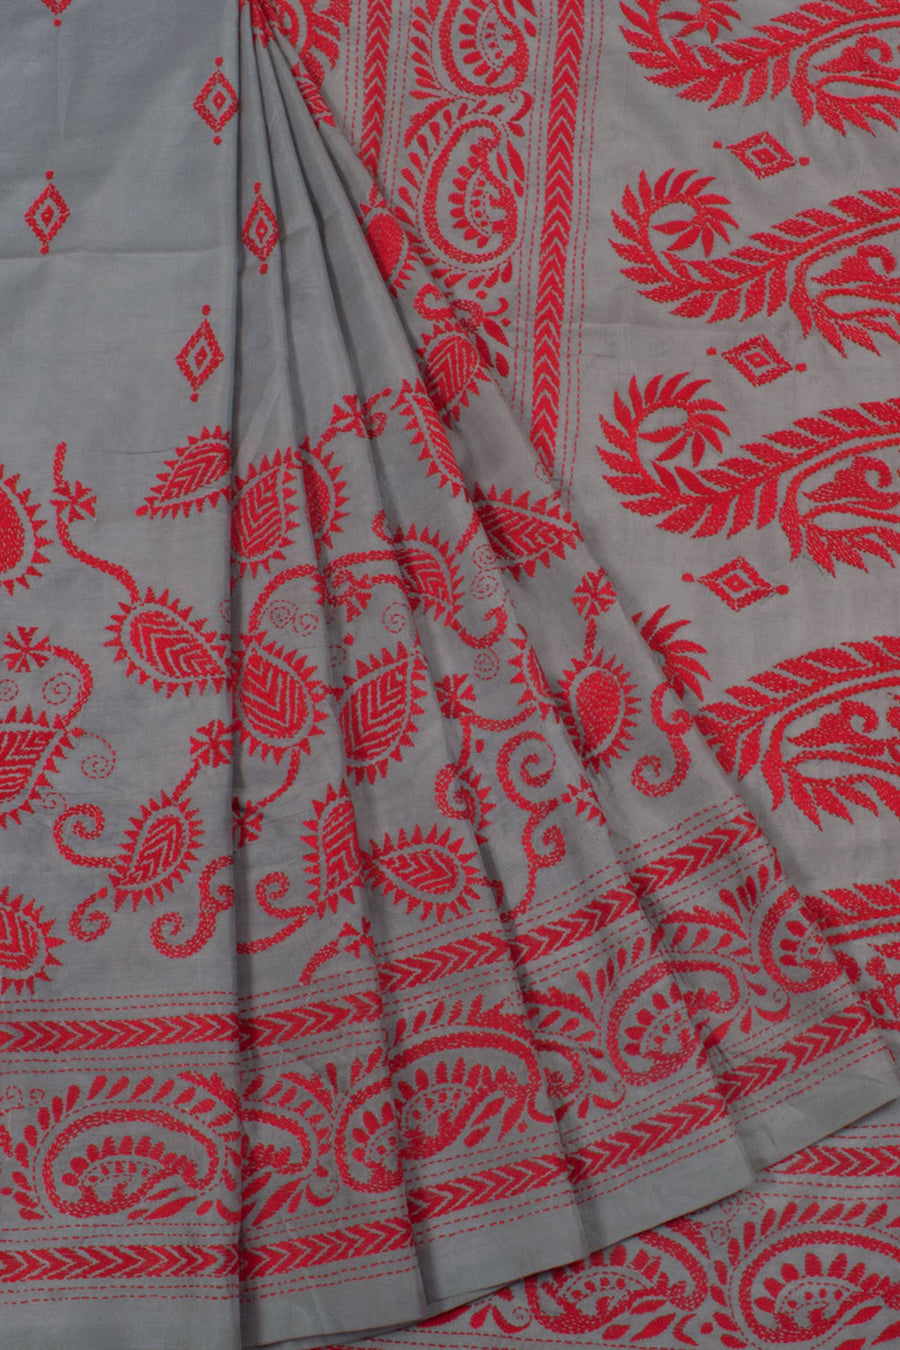 Handloom Half and Half Kantha Embroidered Silk Saree with Floral Design